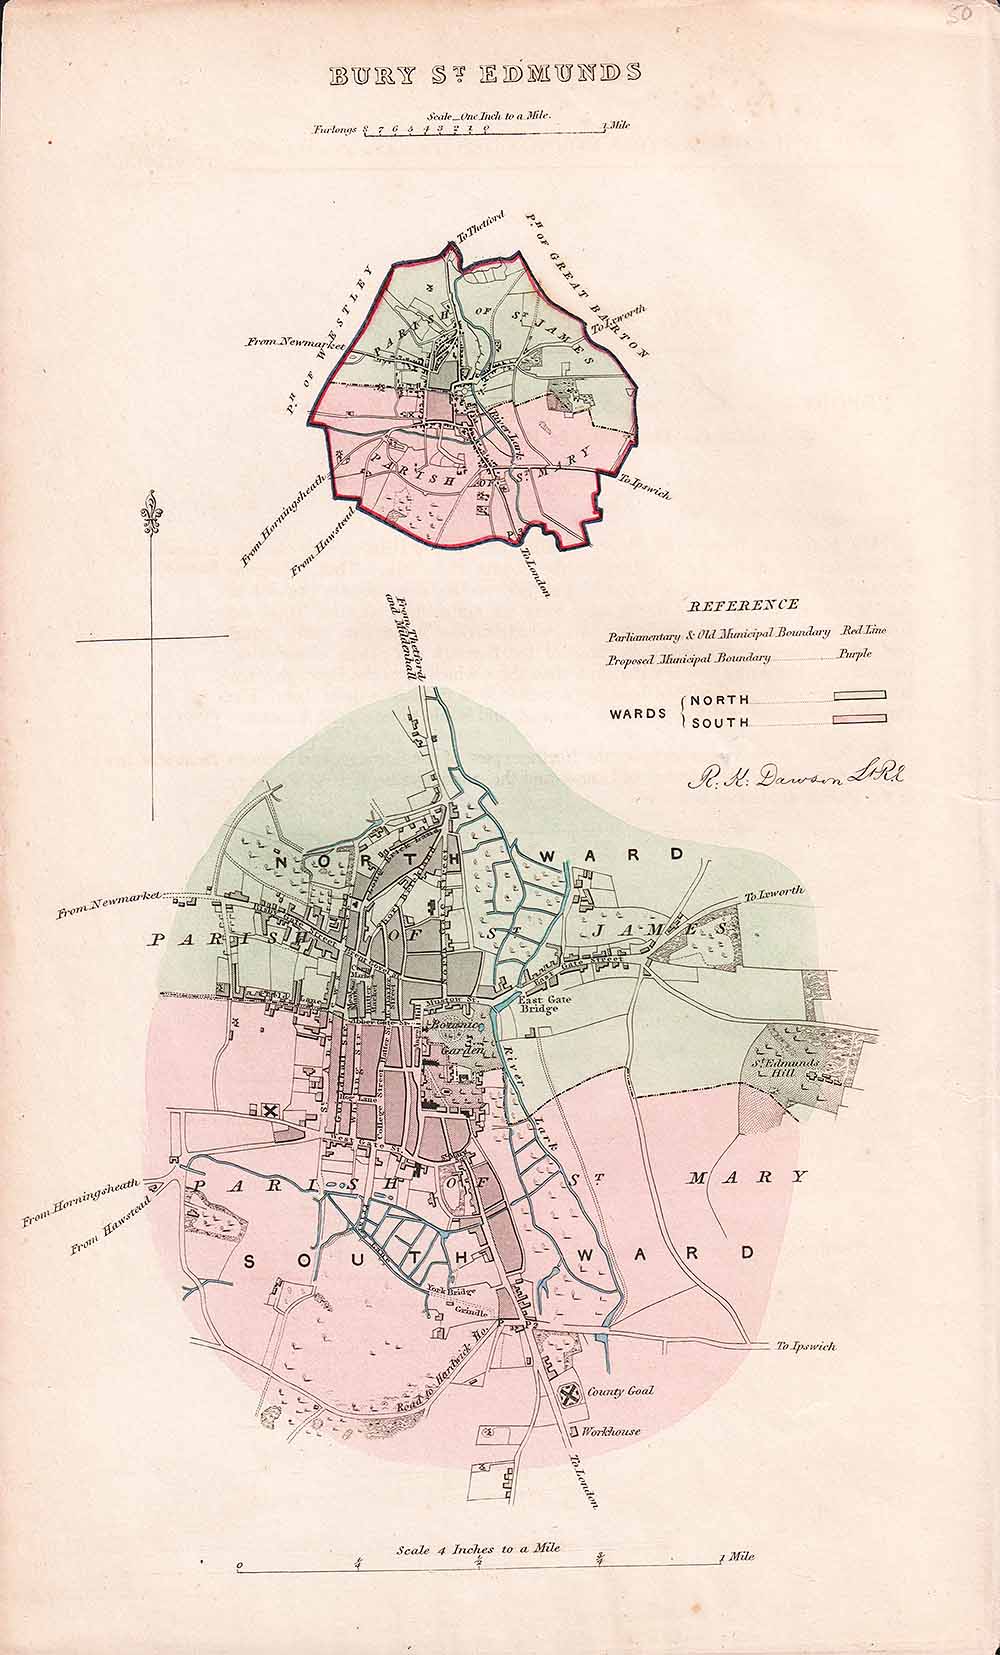 Bury St Edmunds Town Plan - RK Dawson 